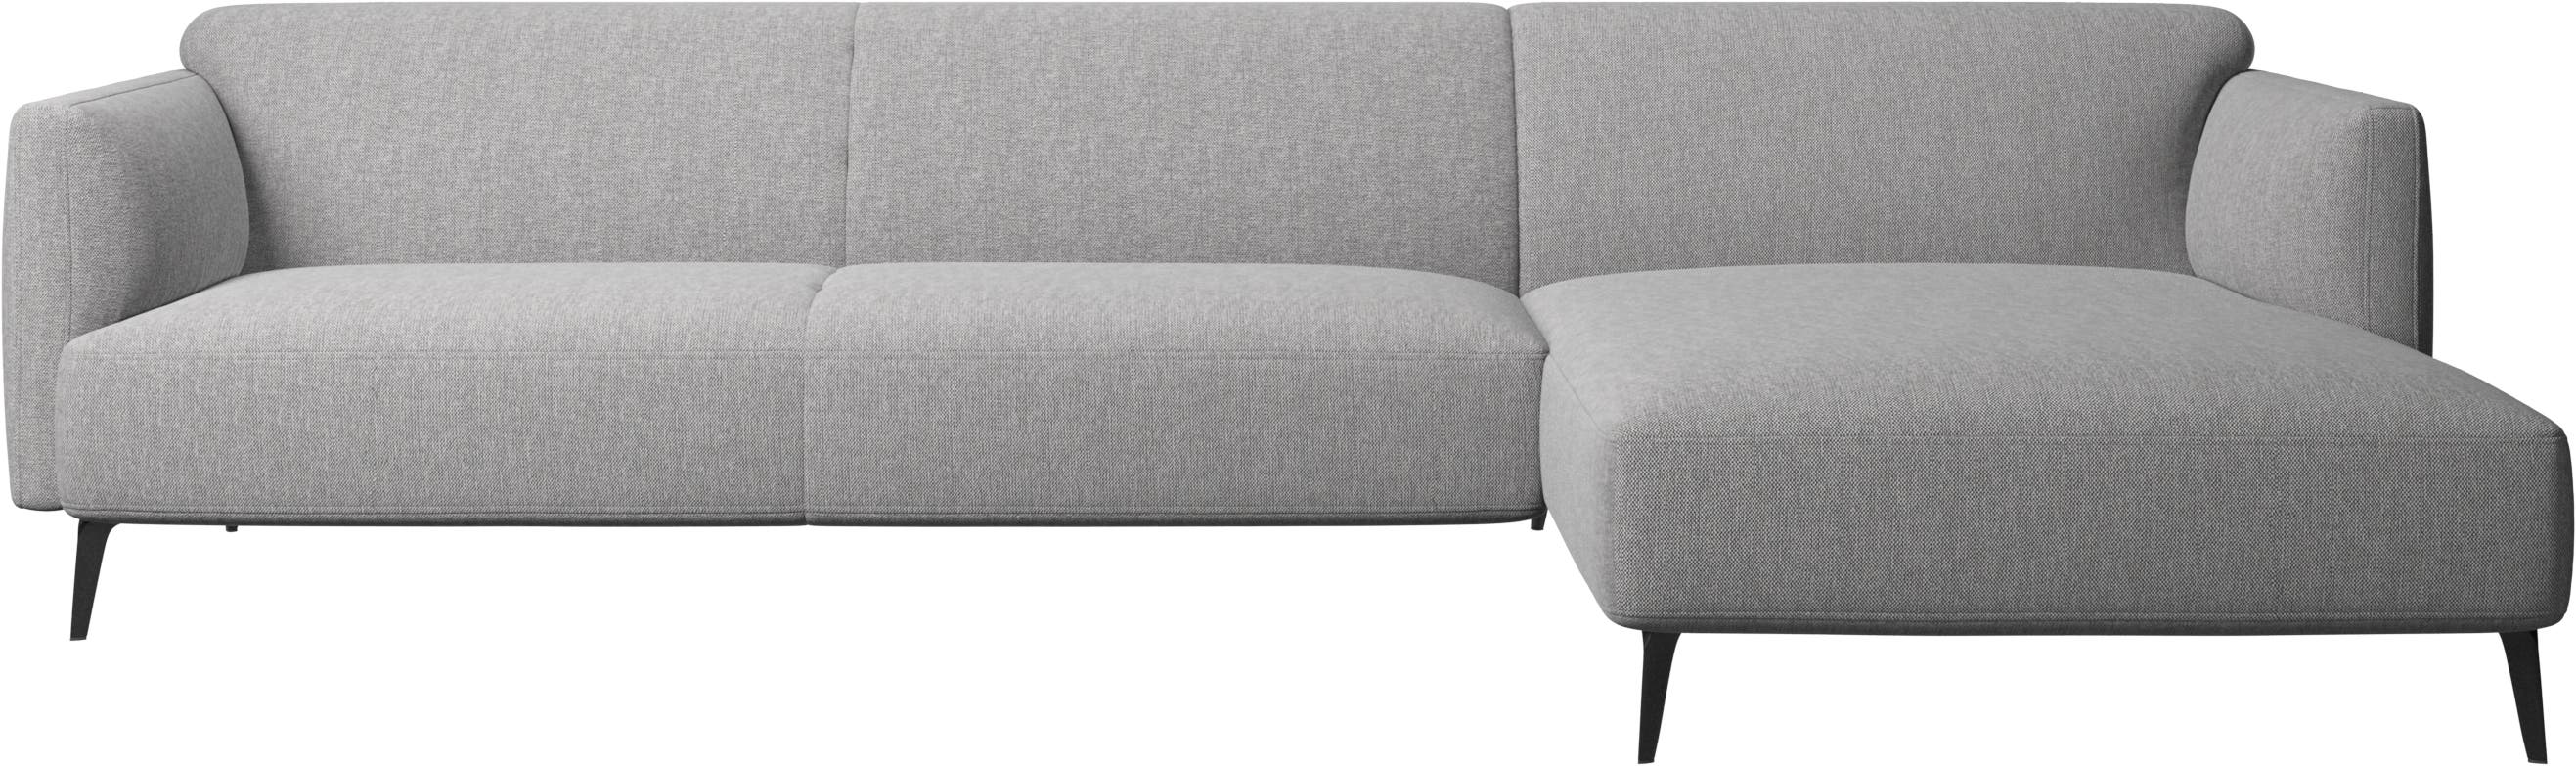 Modena sofa with resting unit